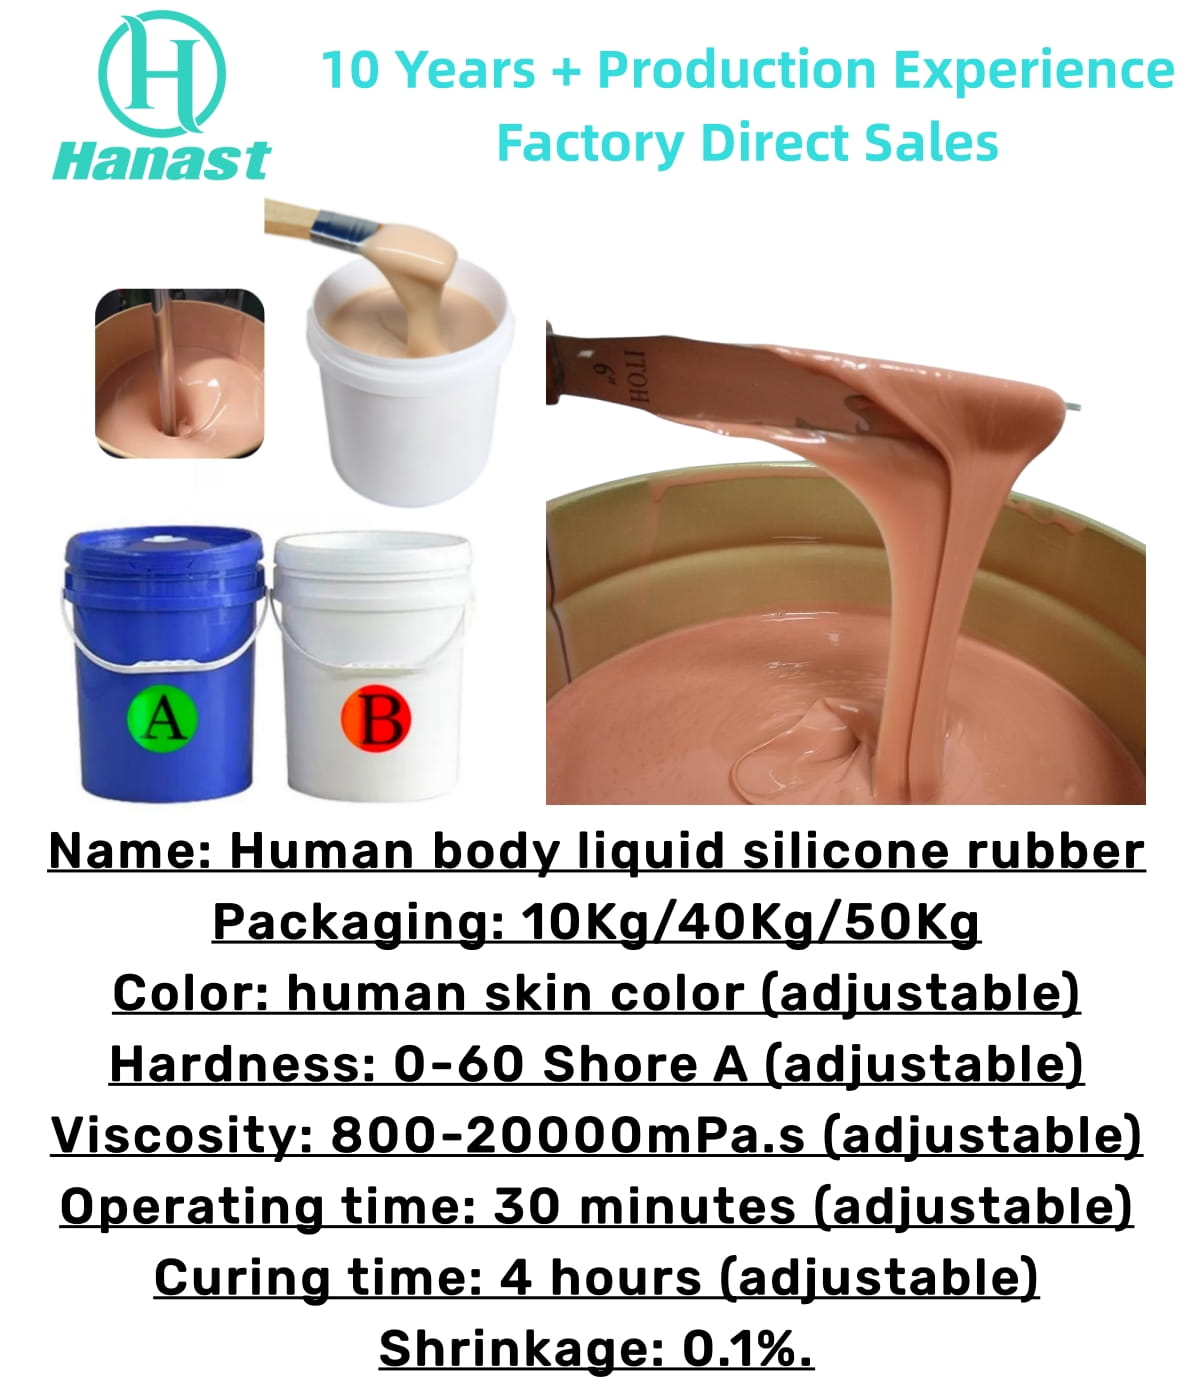 Simulated human silicone